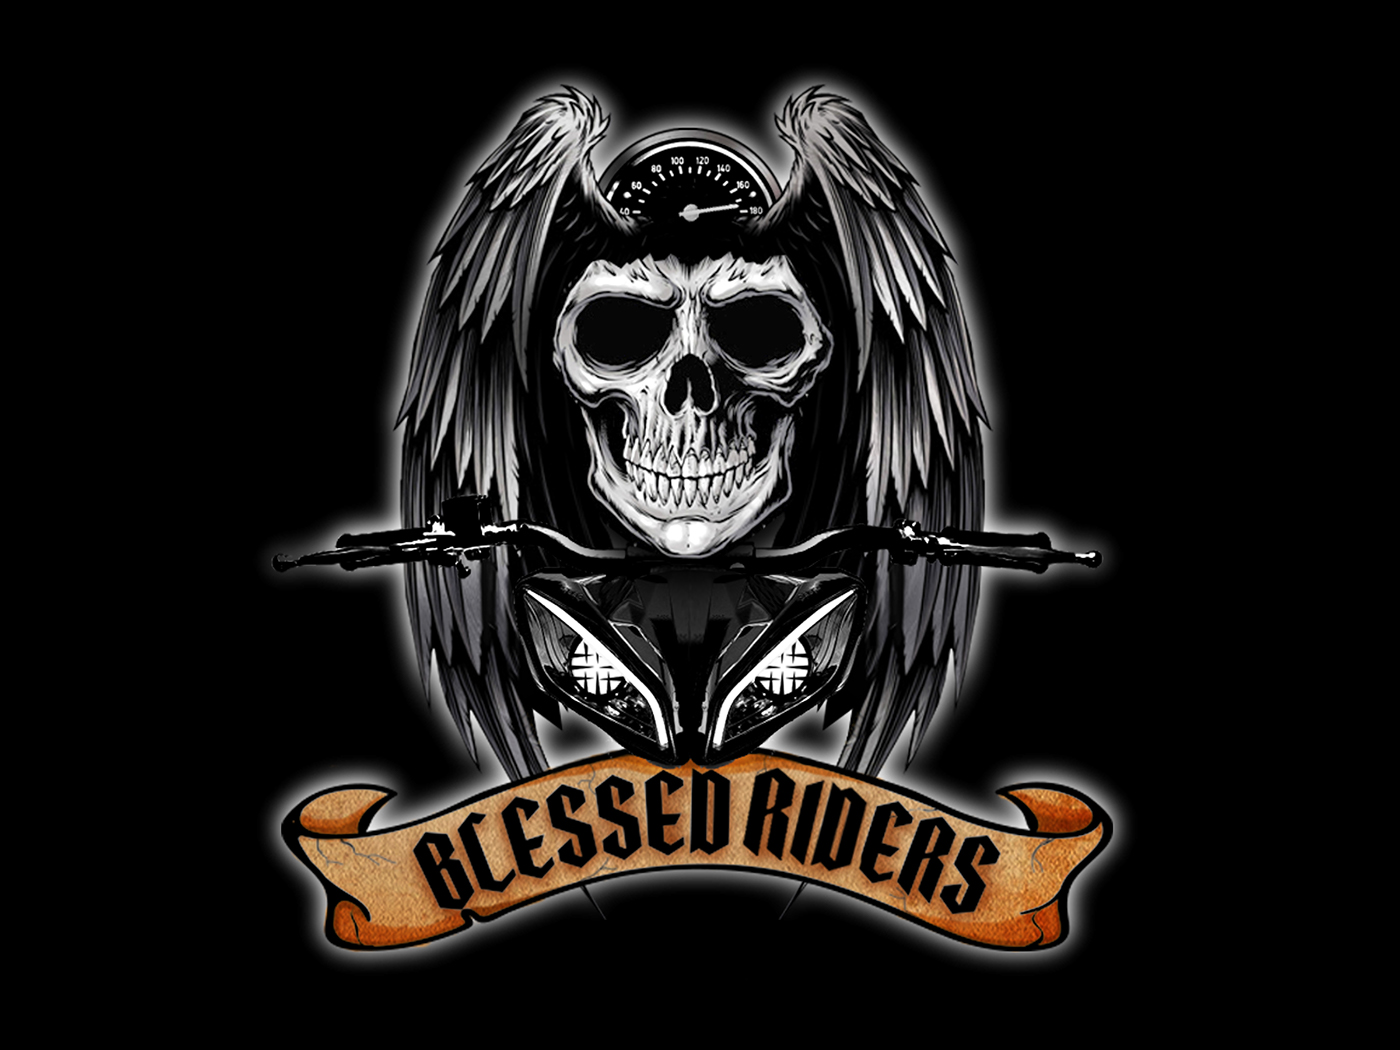 motorcycle club skull bikes moto Motor bless riders